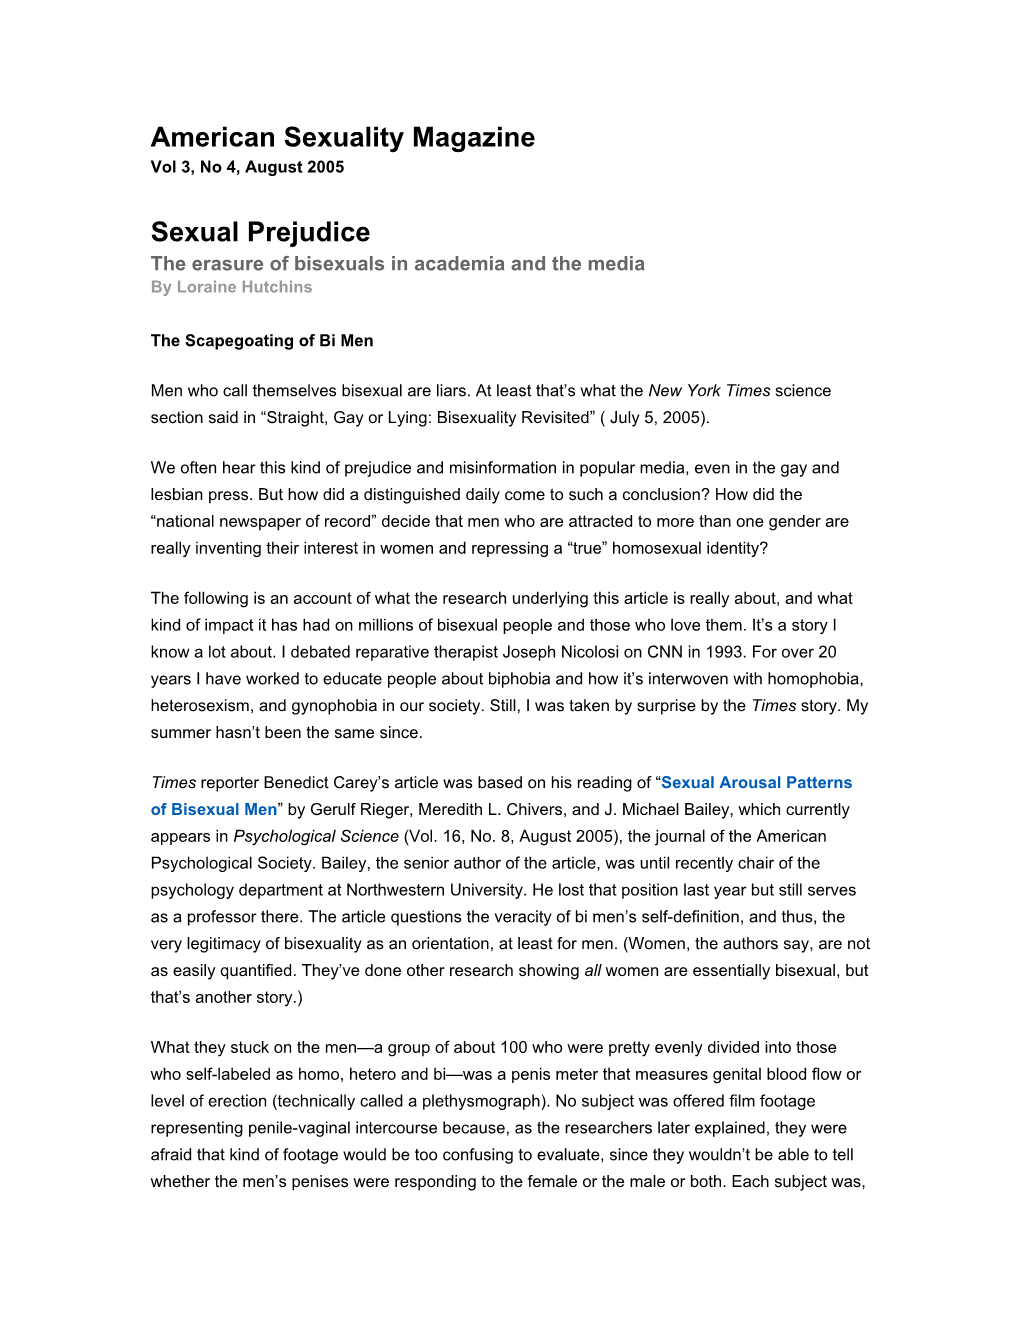 American Sexuality Magazine Sexual Prejudice